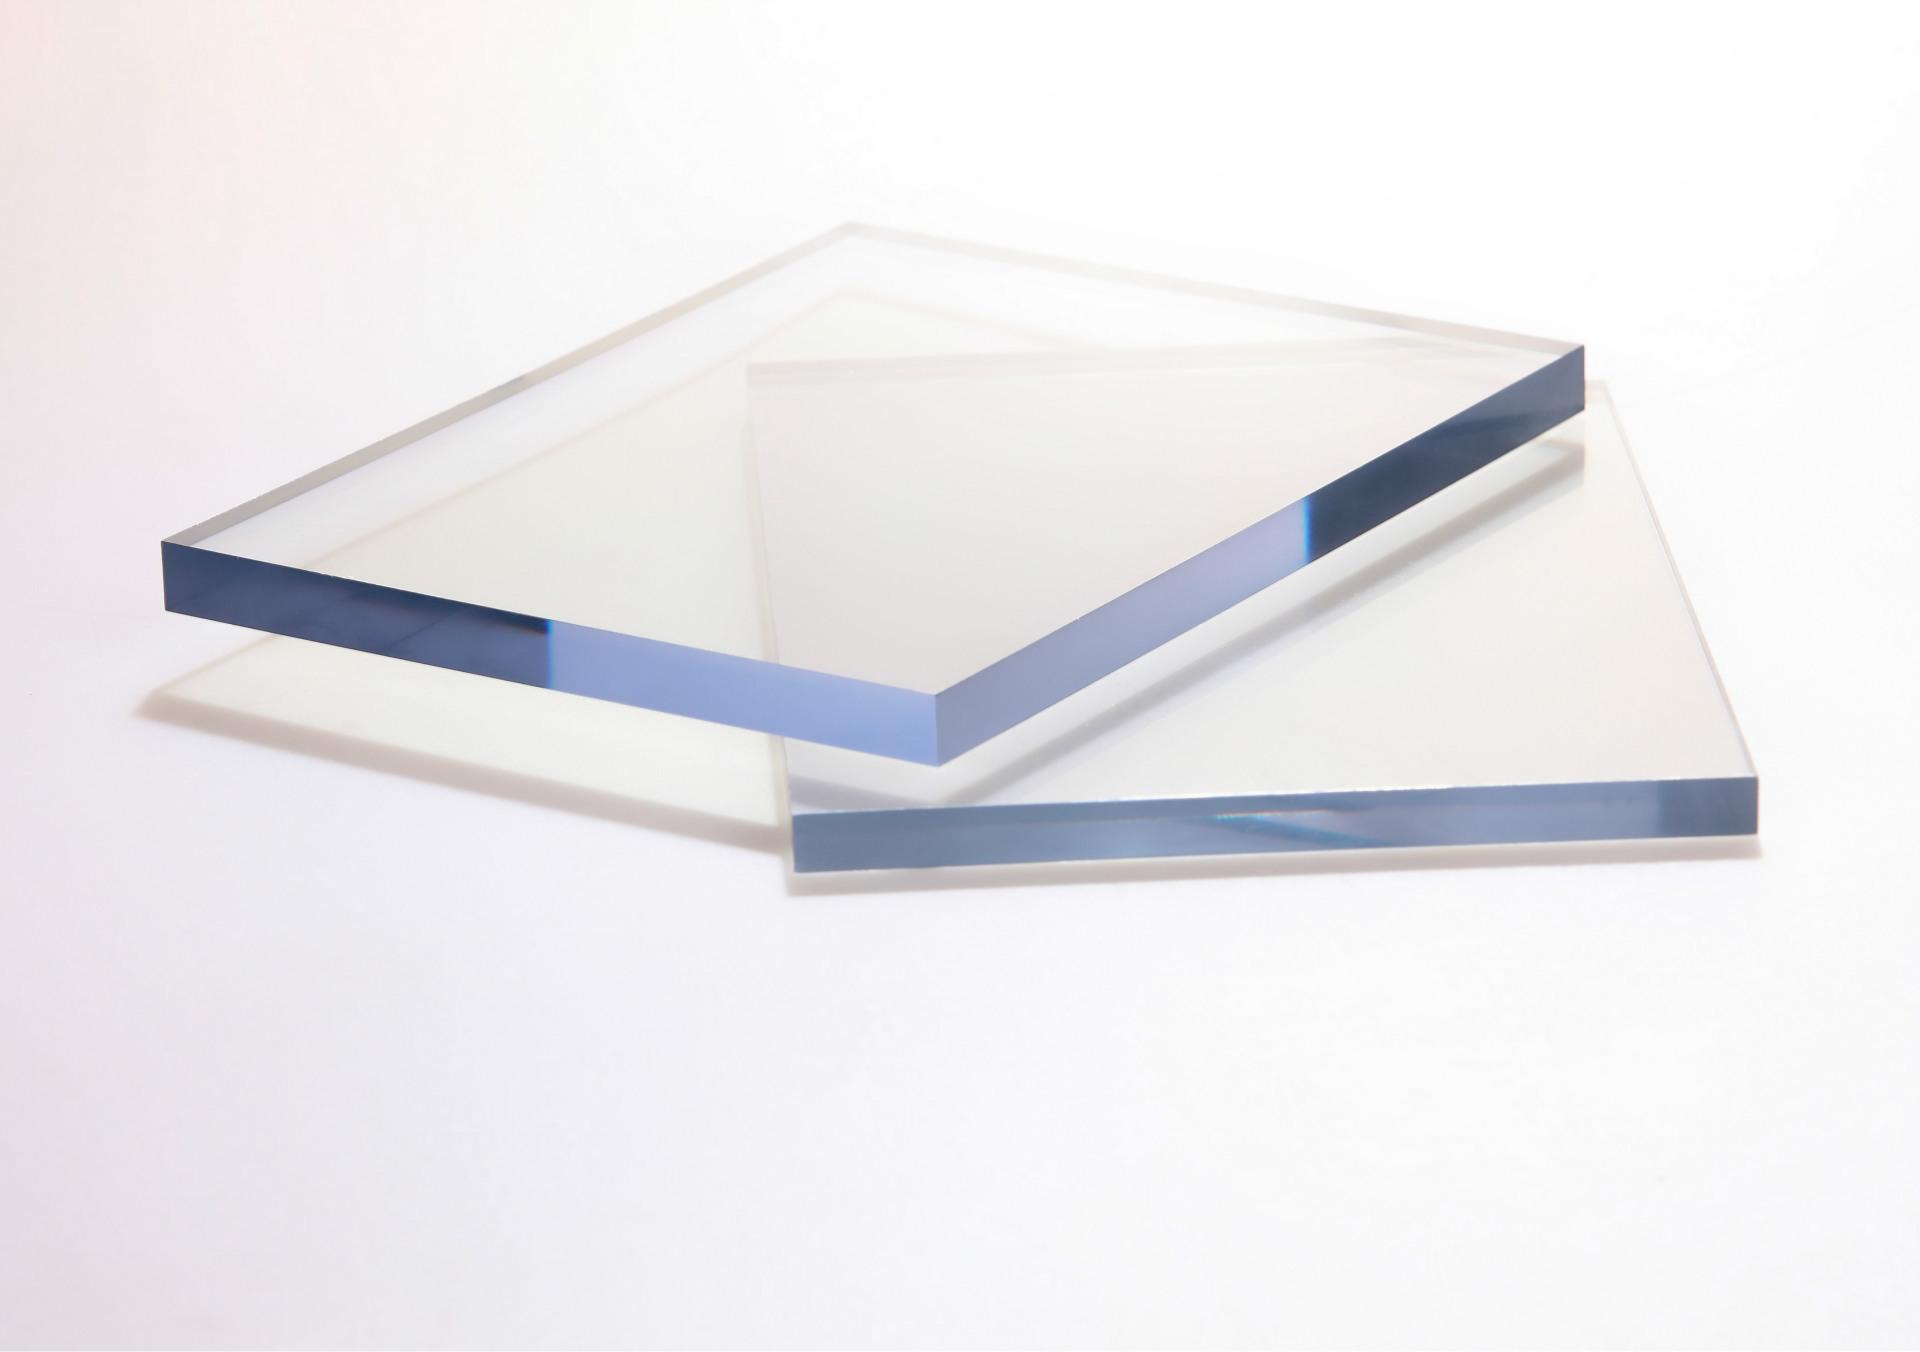 Panel de lámina de policarbonato estabilizado UV de superficie pulida cristalina irrompible 